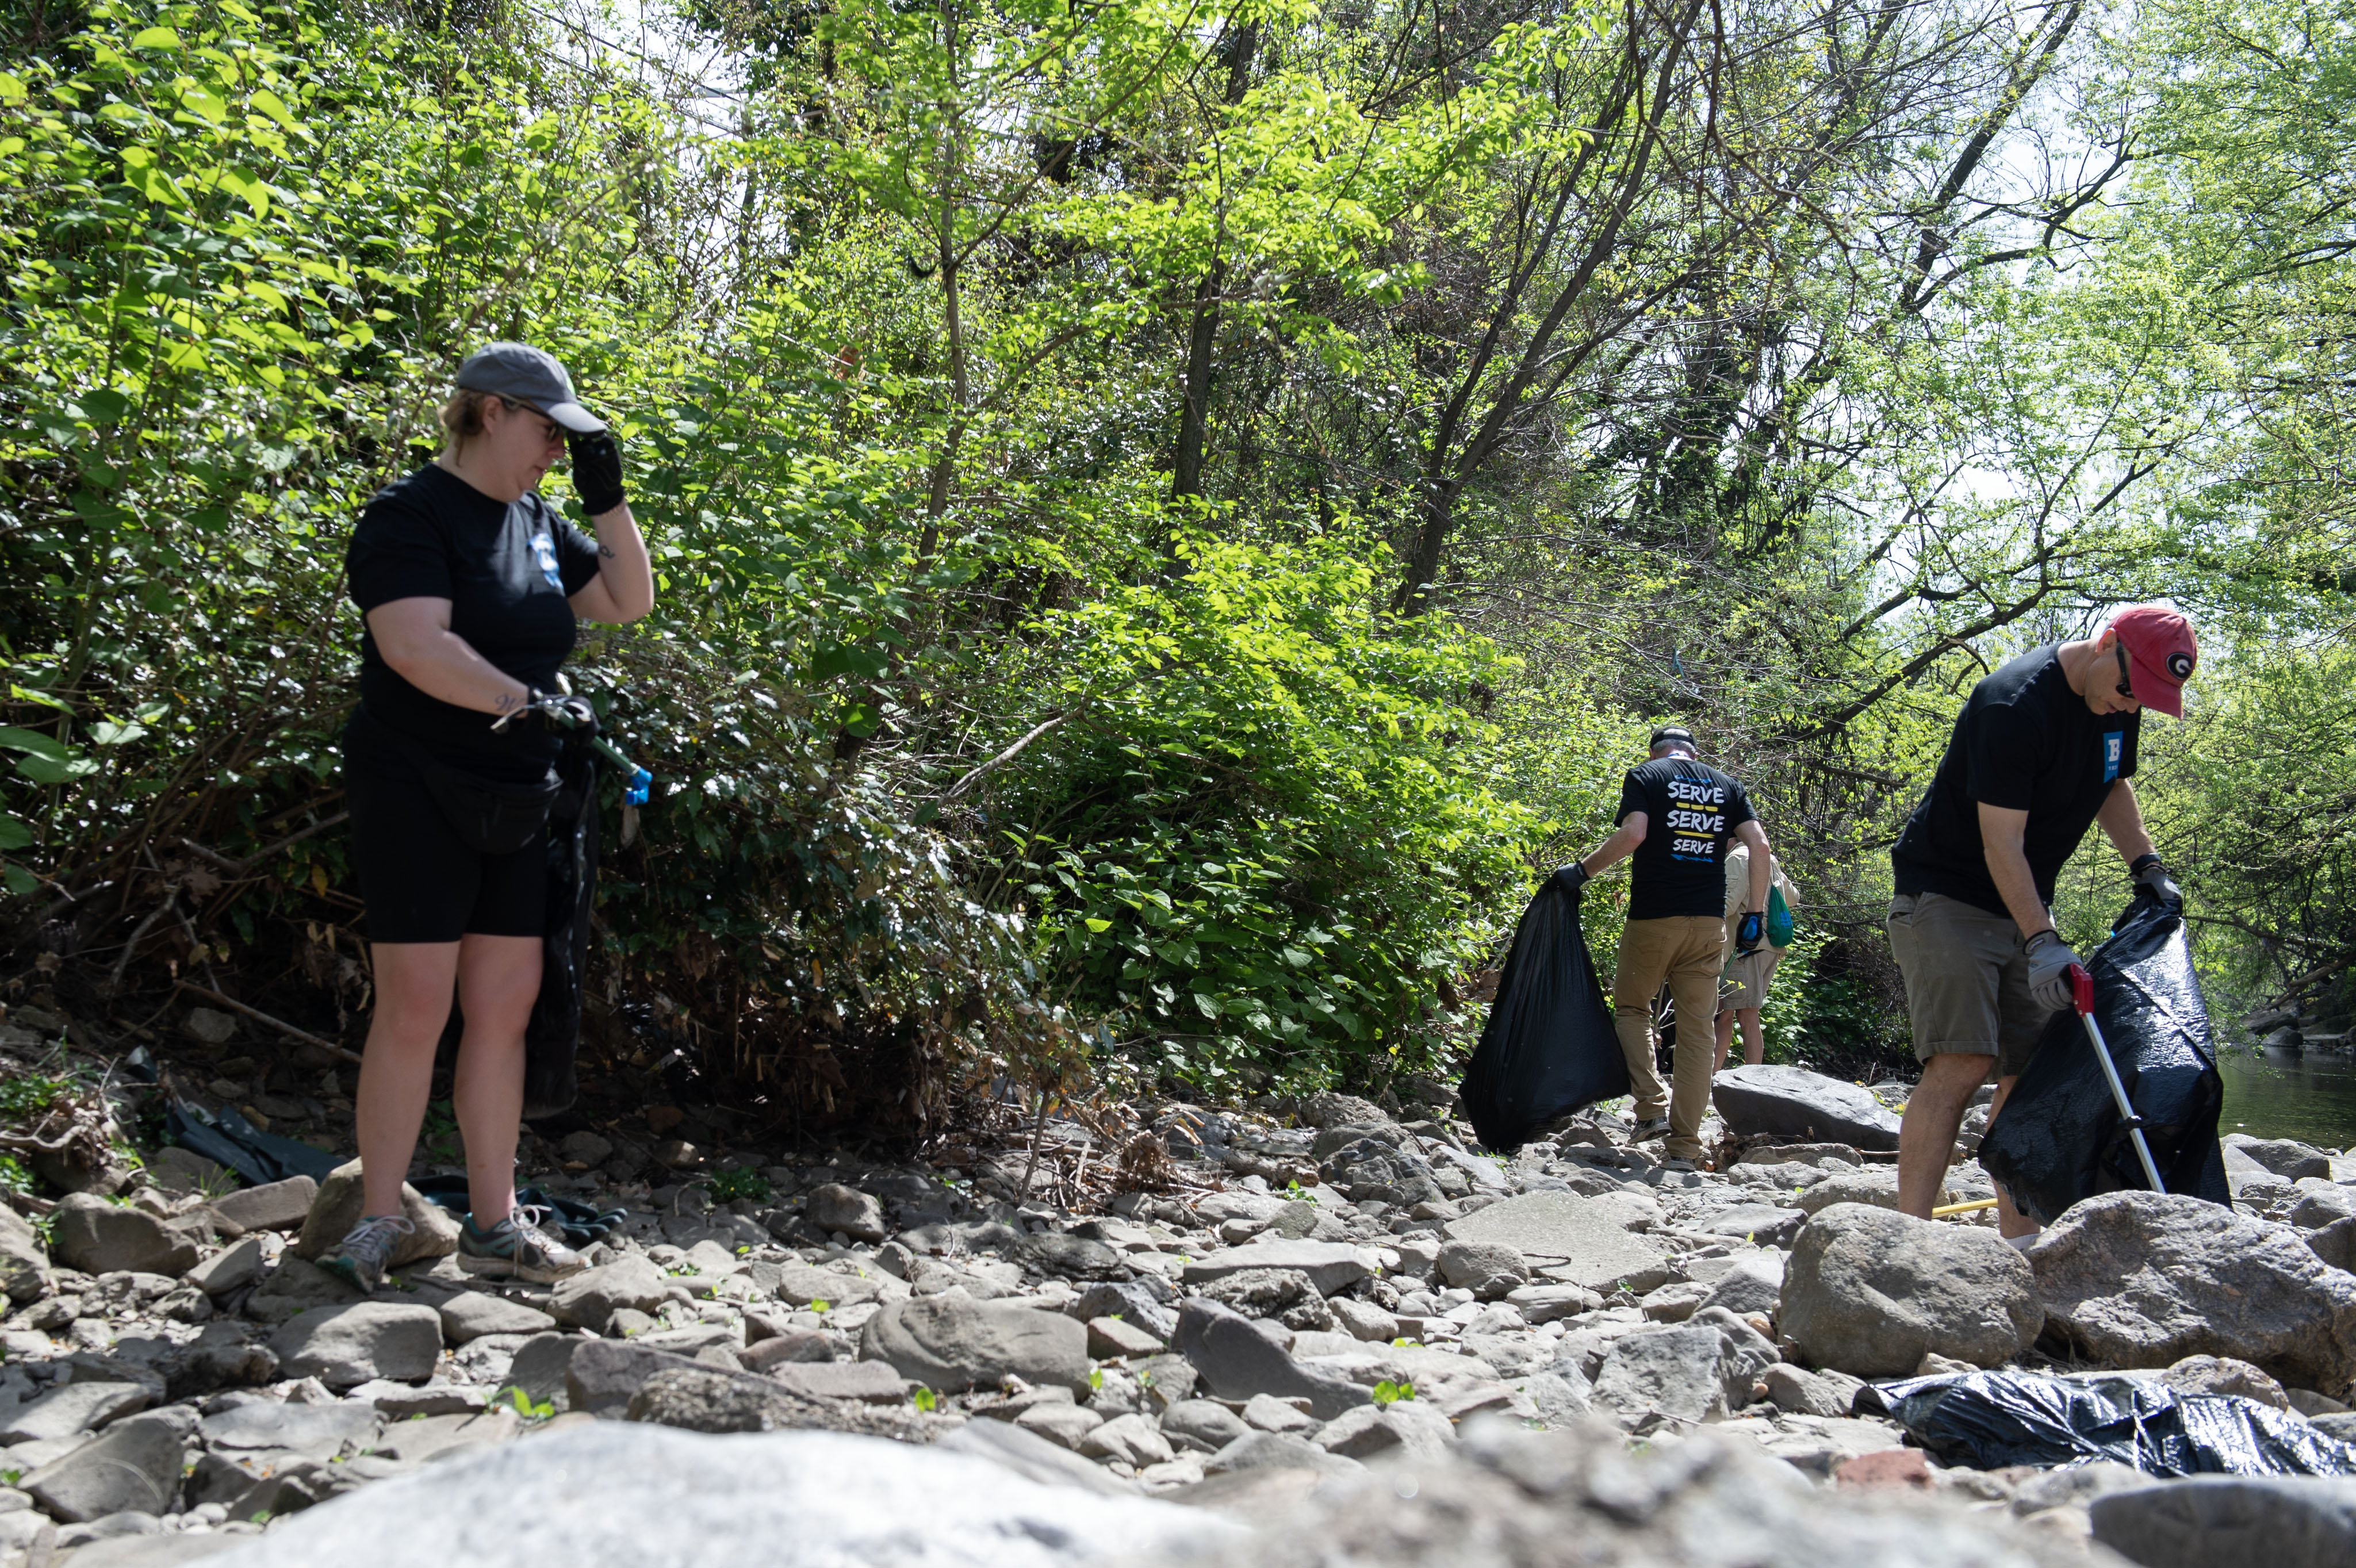 Volunteers clean up trash strewn alongside the Jones Falls creek.